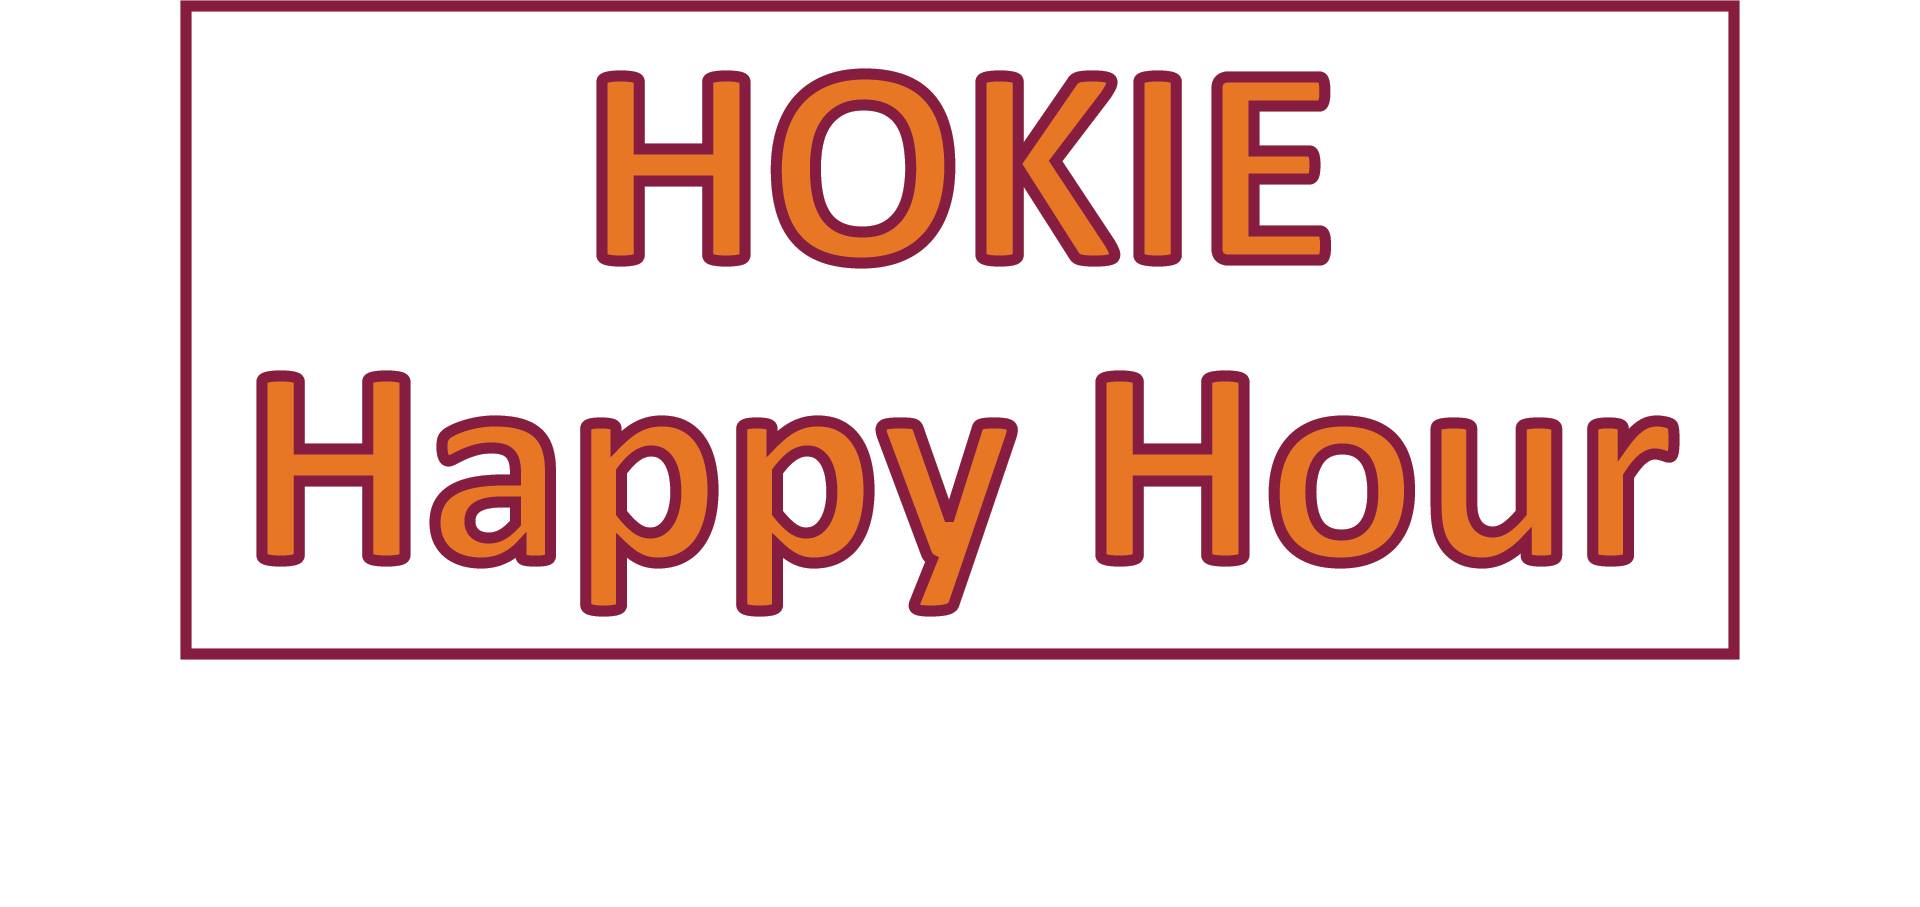 February 2023 Hokie Happy Hour